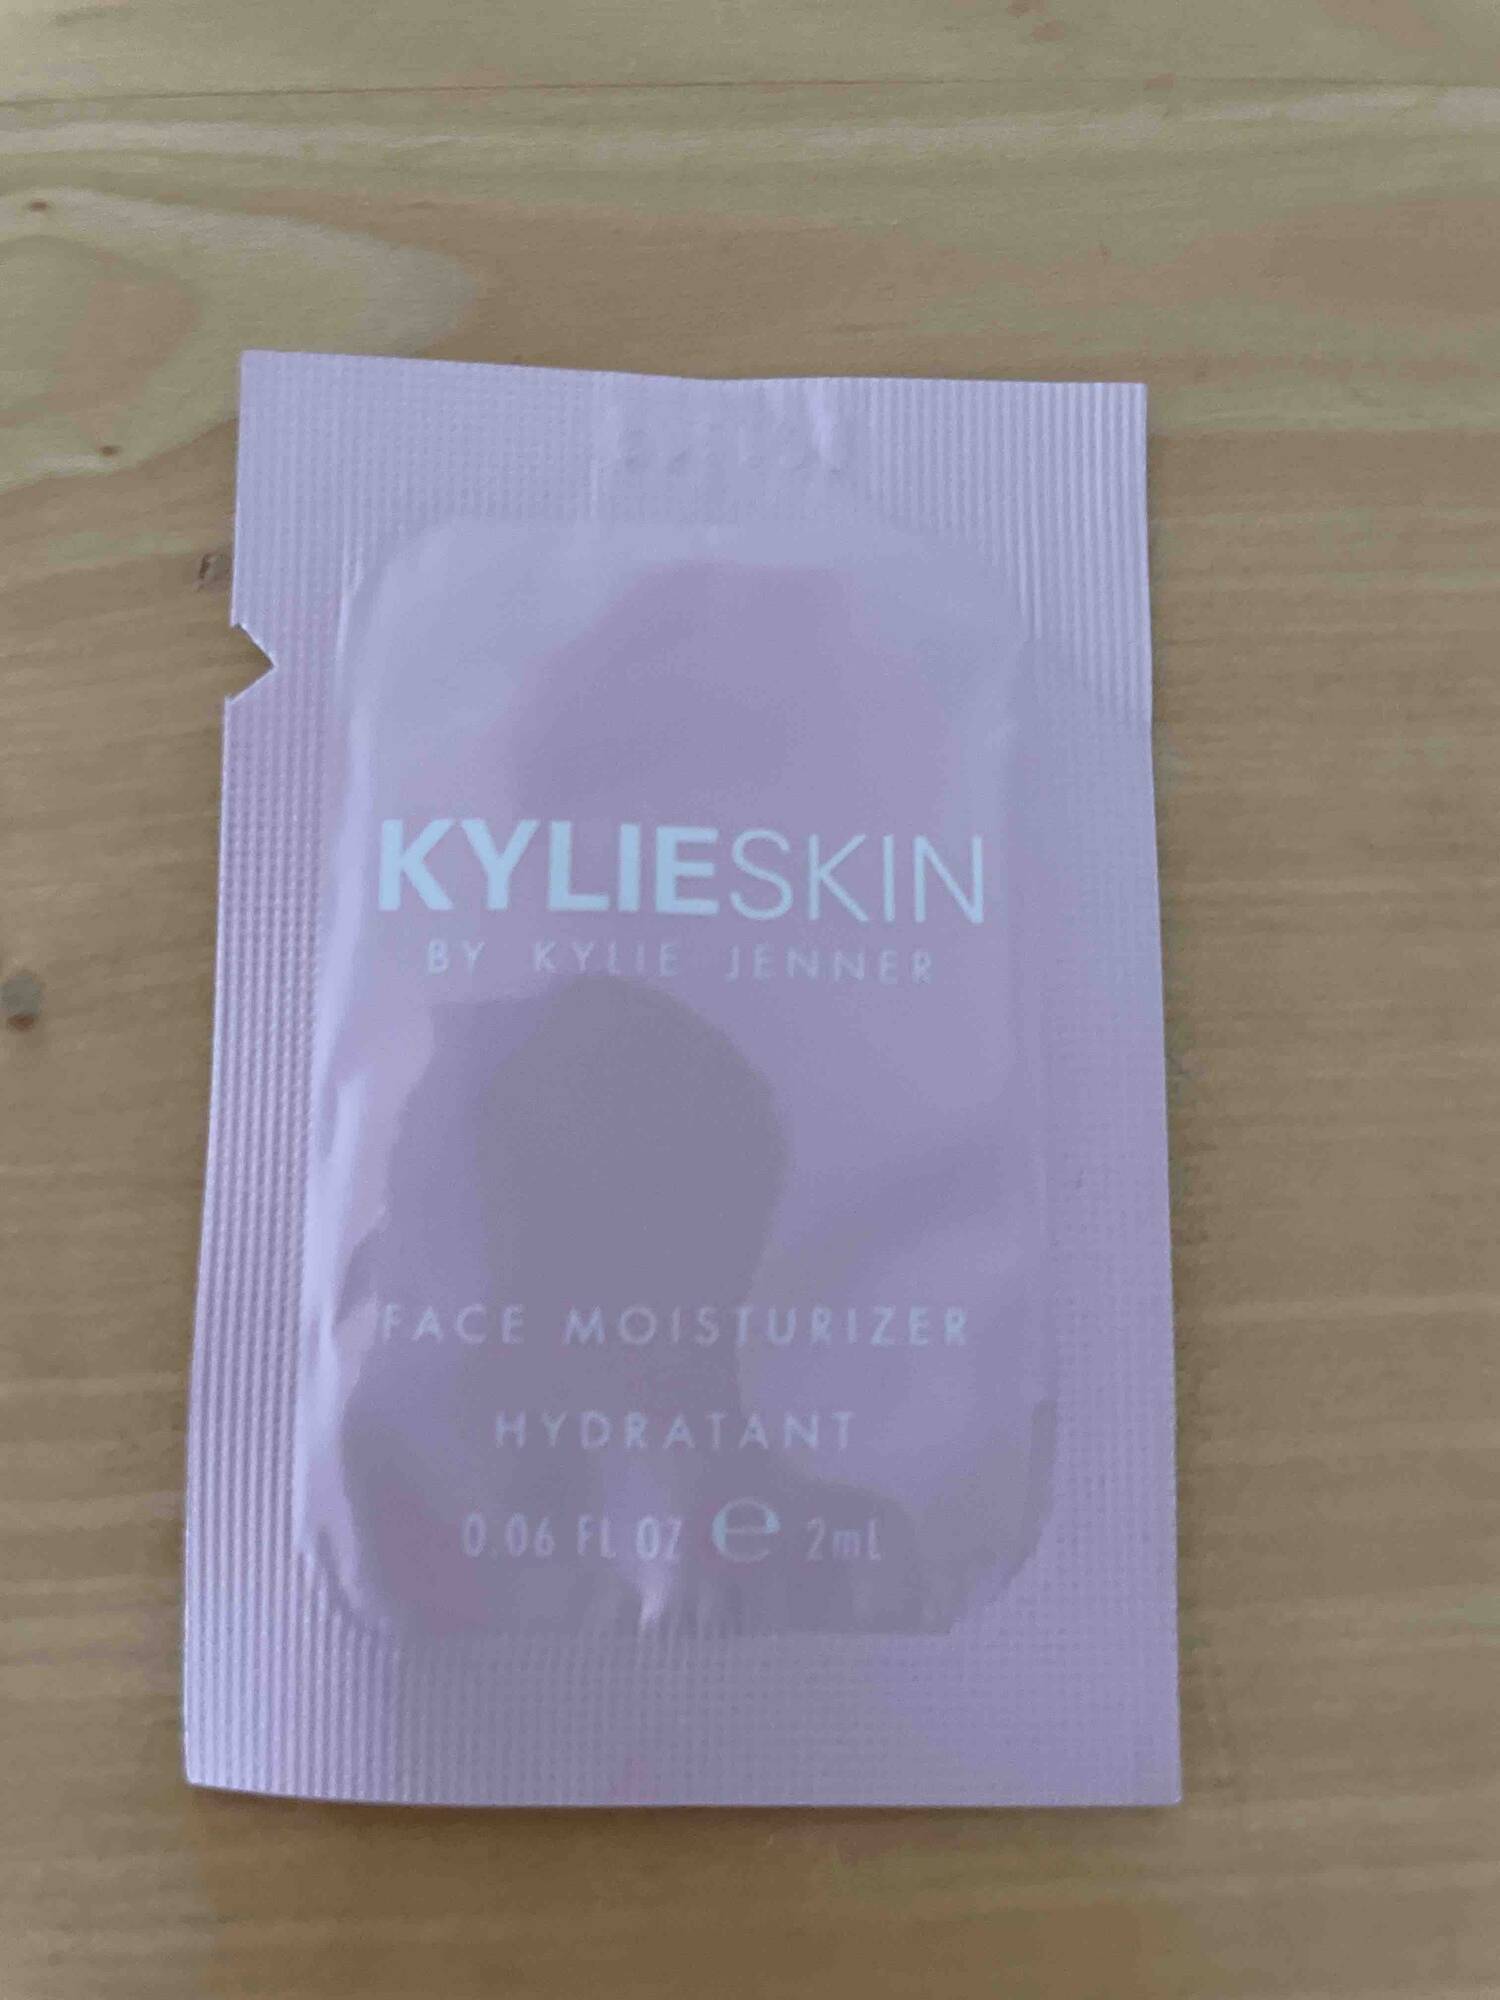 KYLIE JENNER - Kylieskin - Face moisturizer